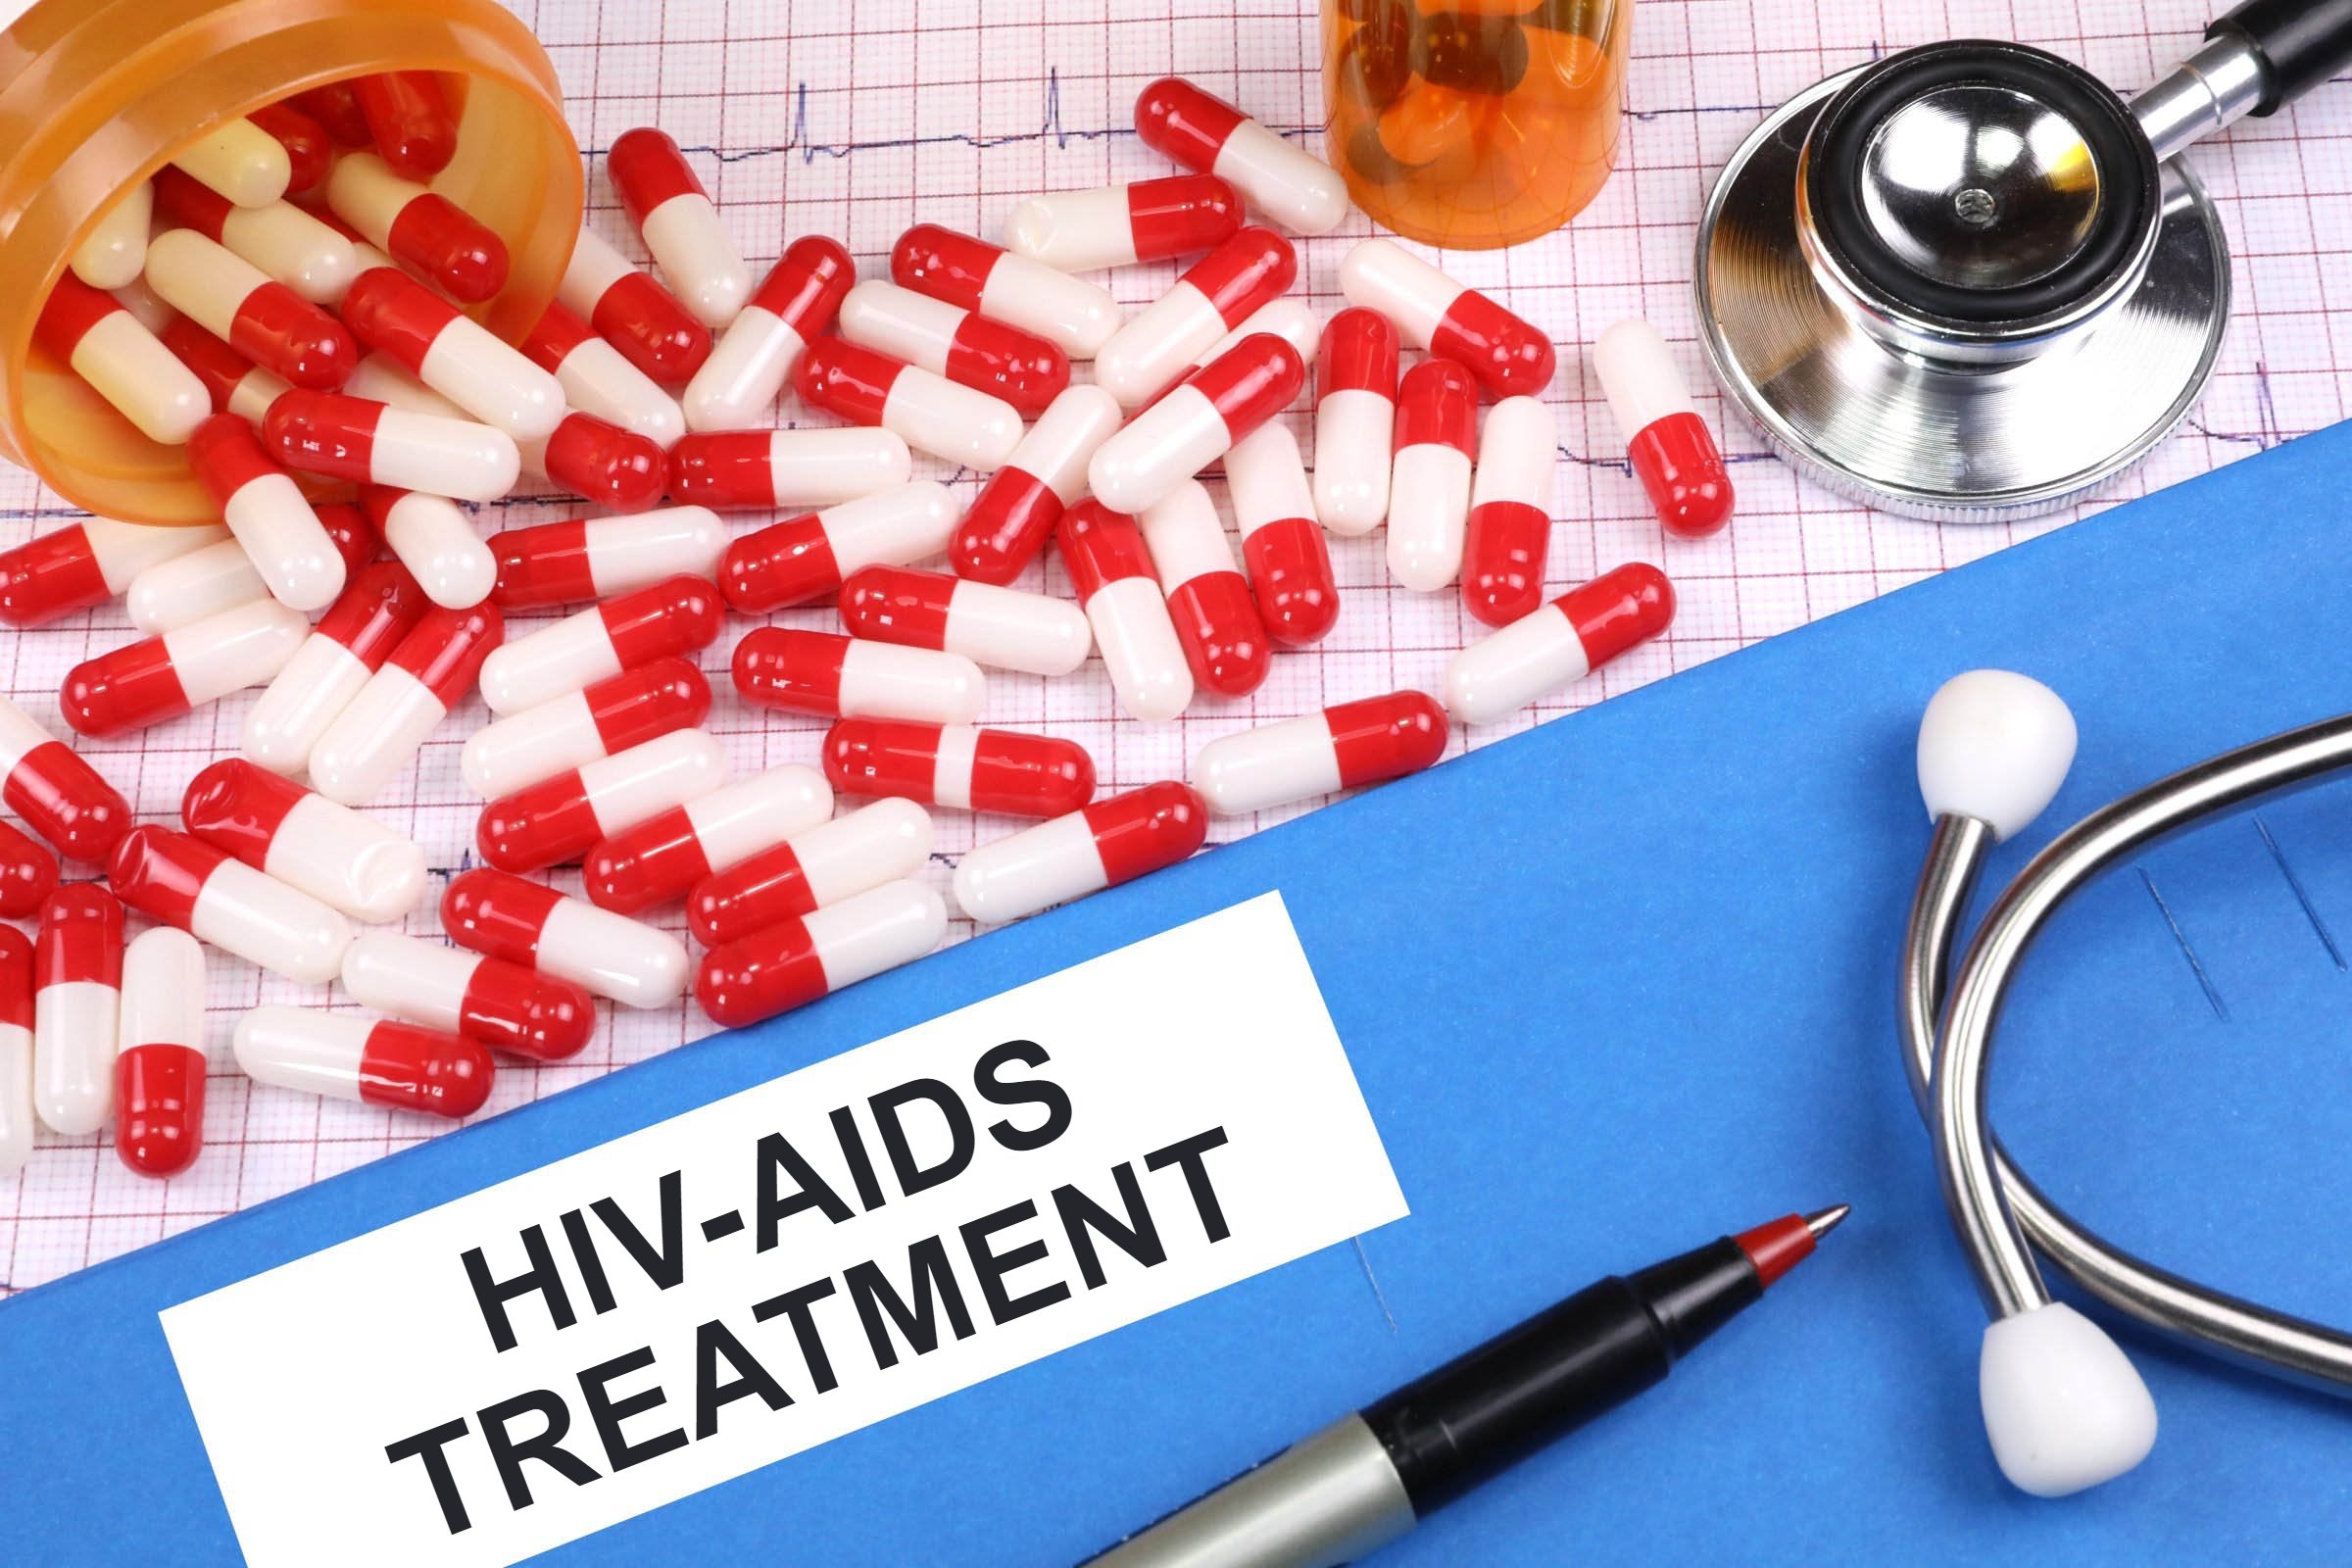 hiv aids treatment